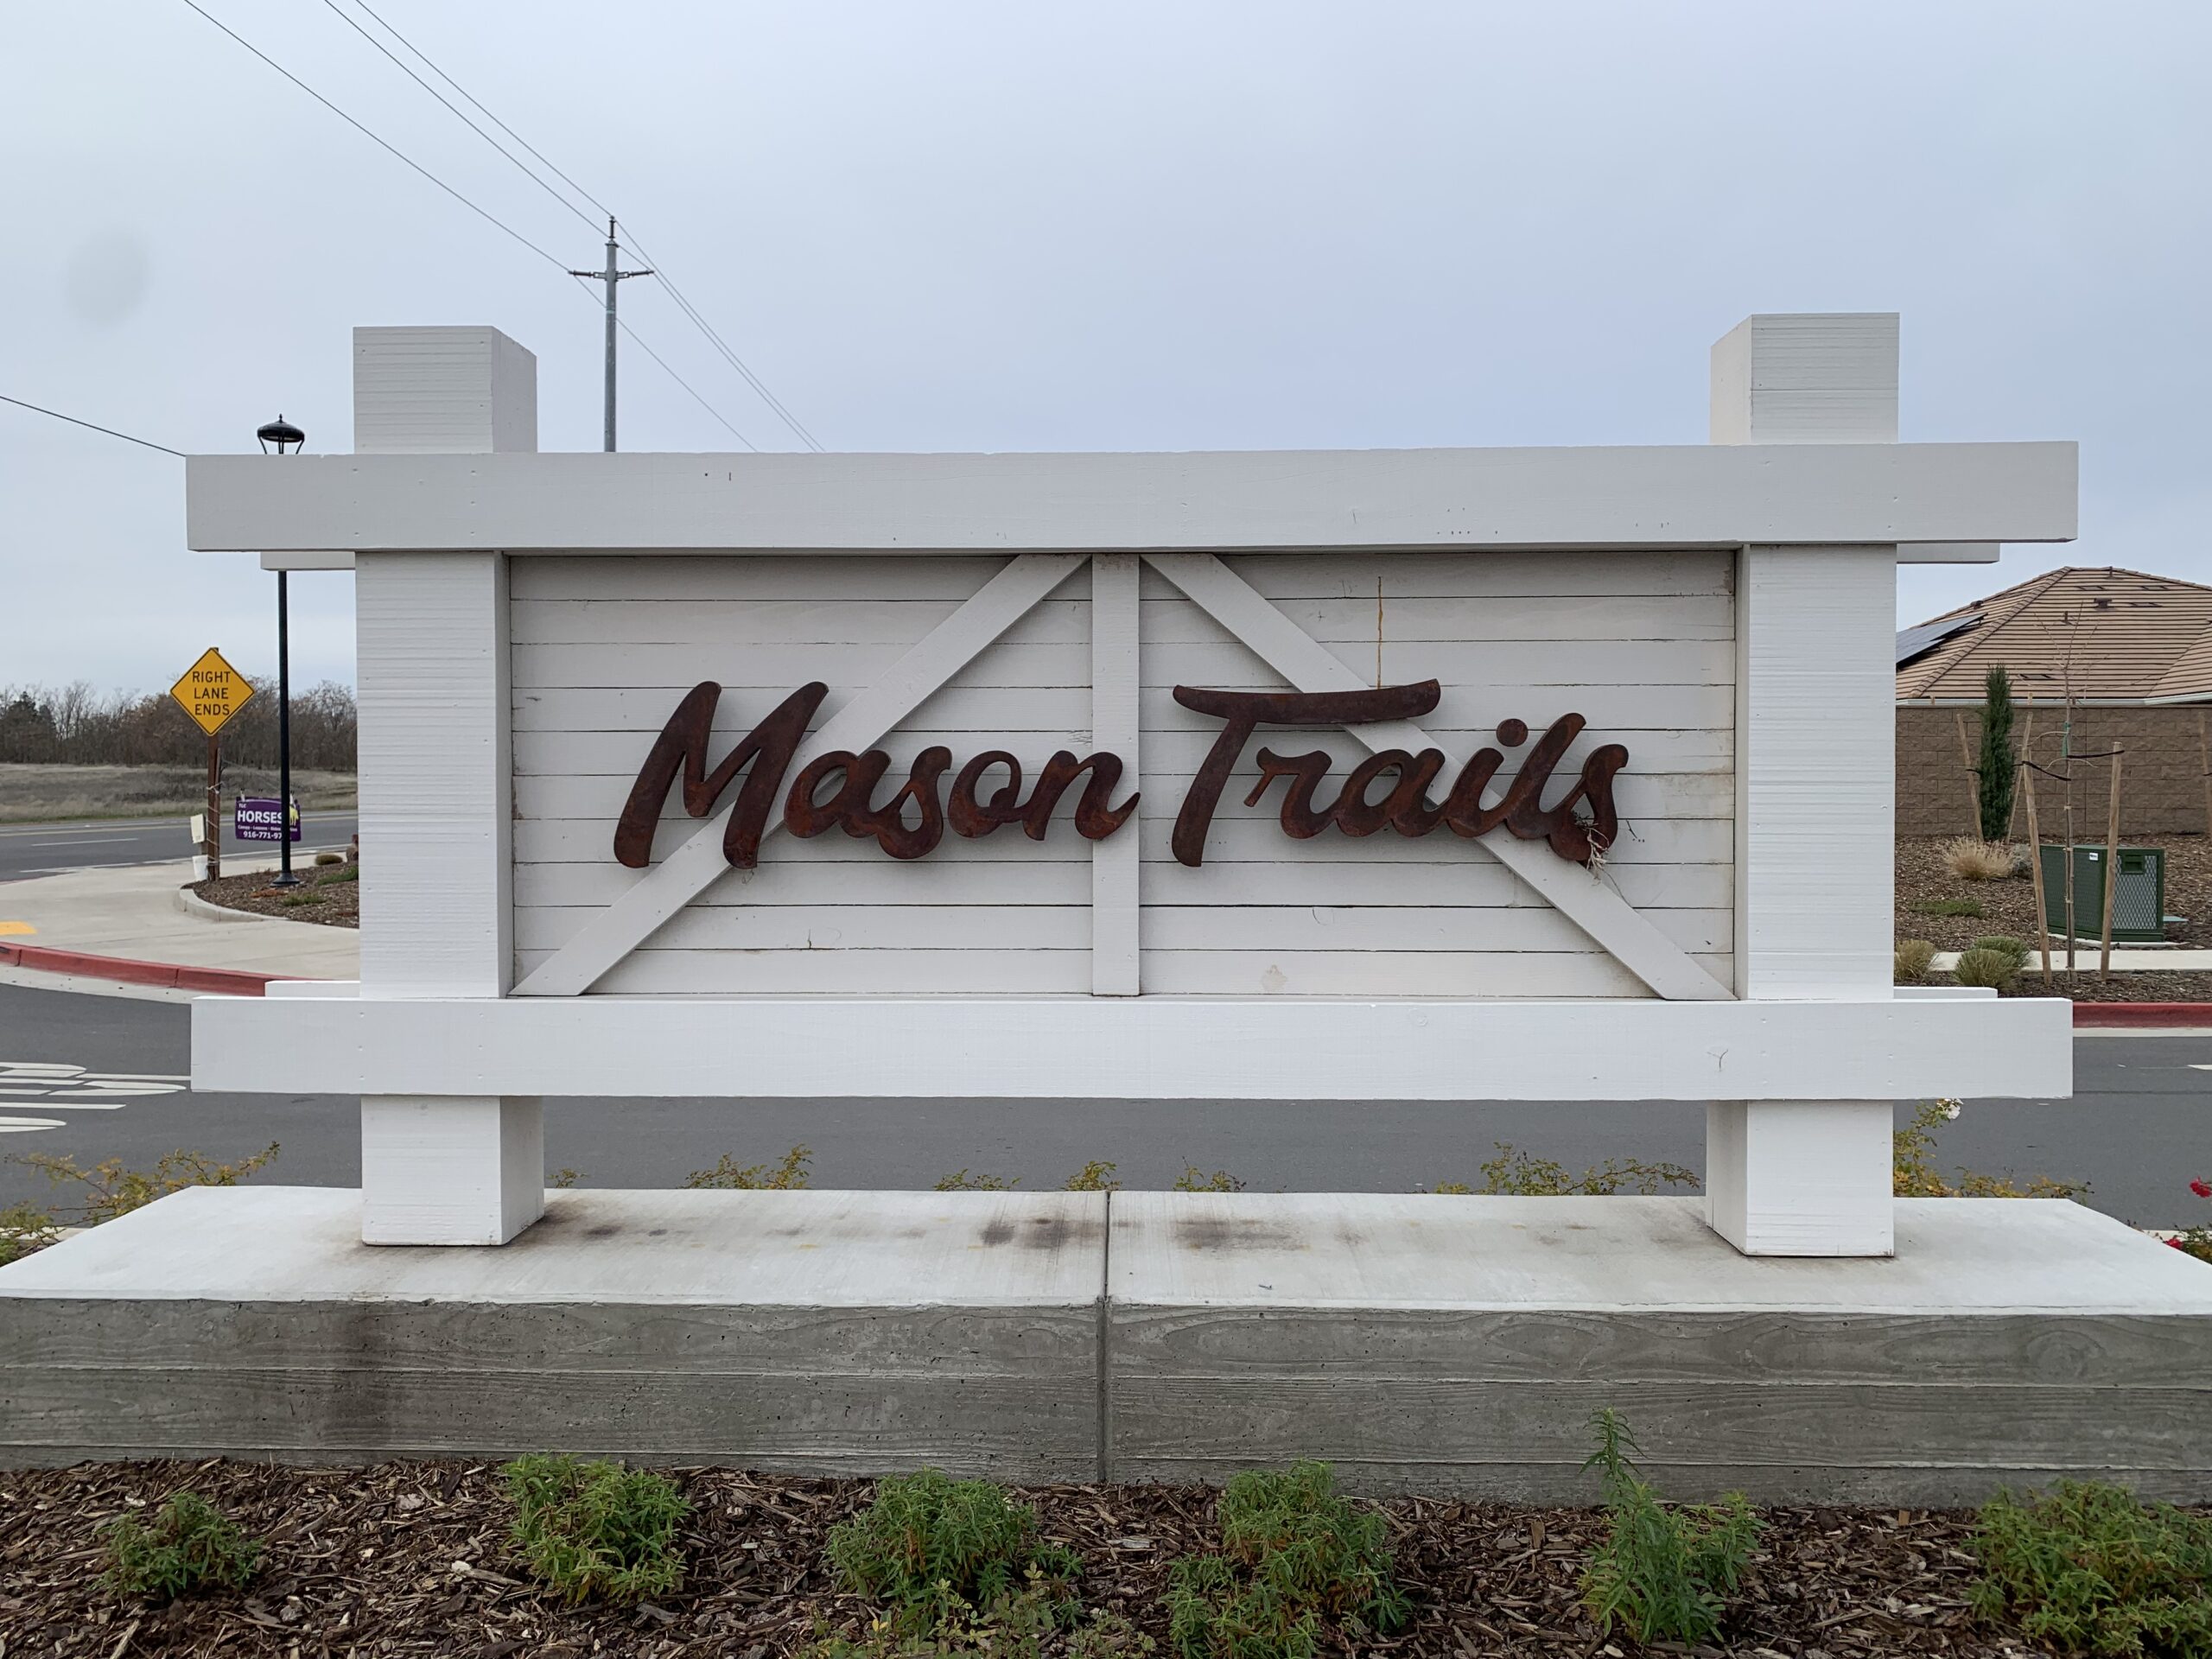 Mason Trails